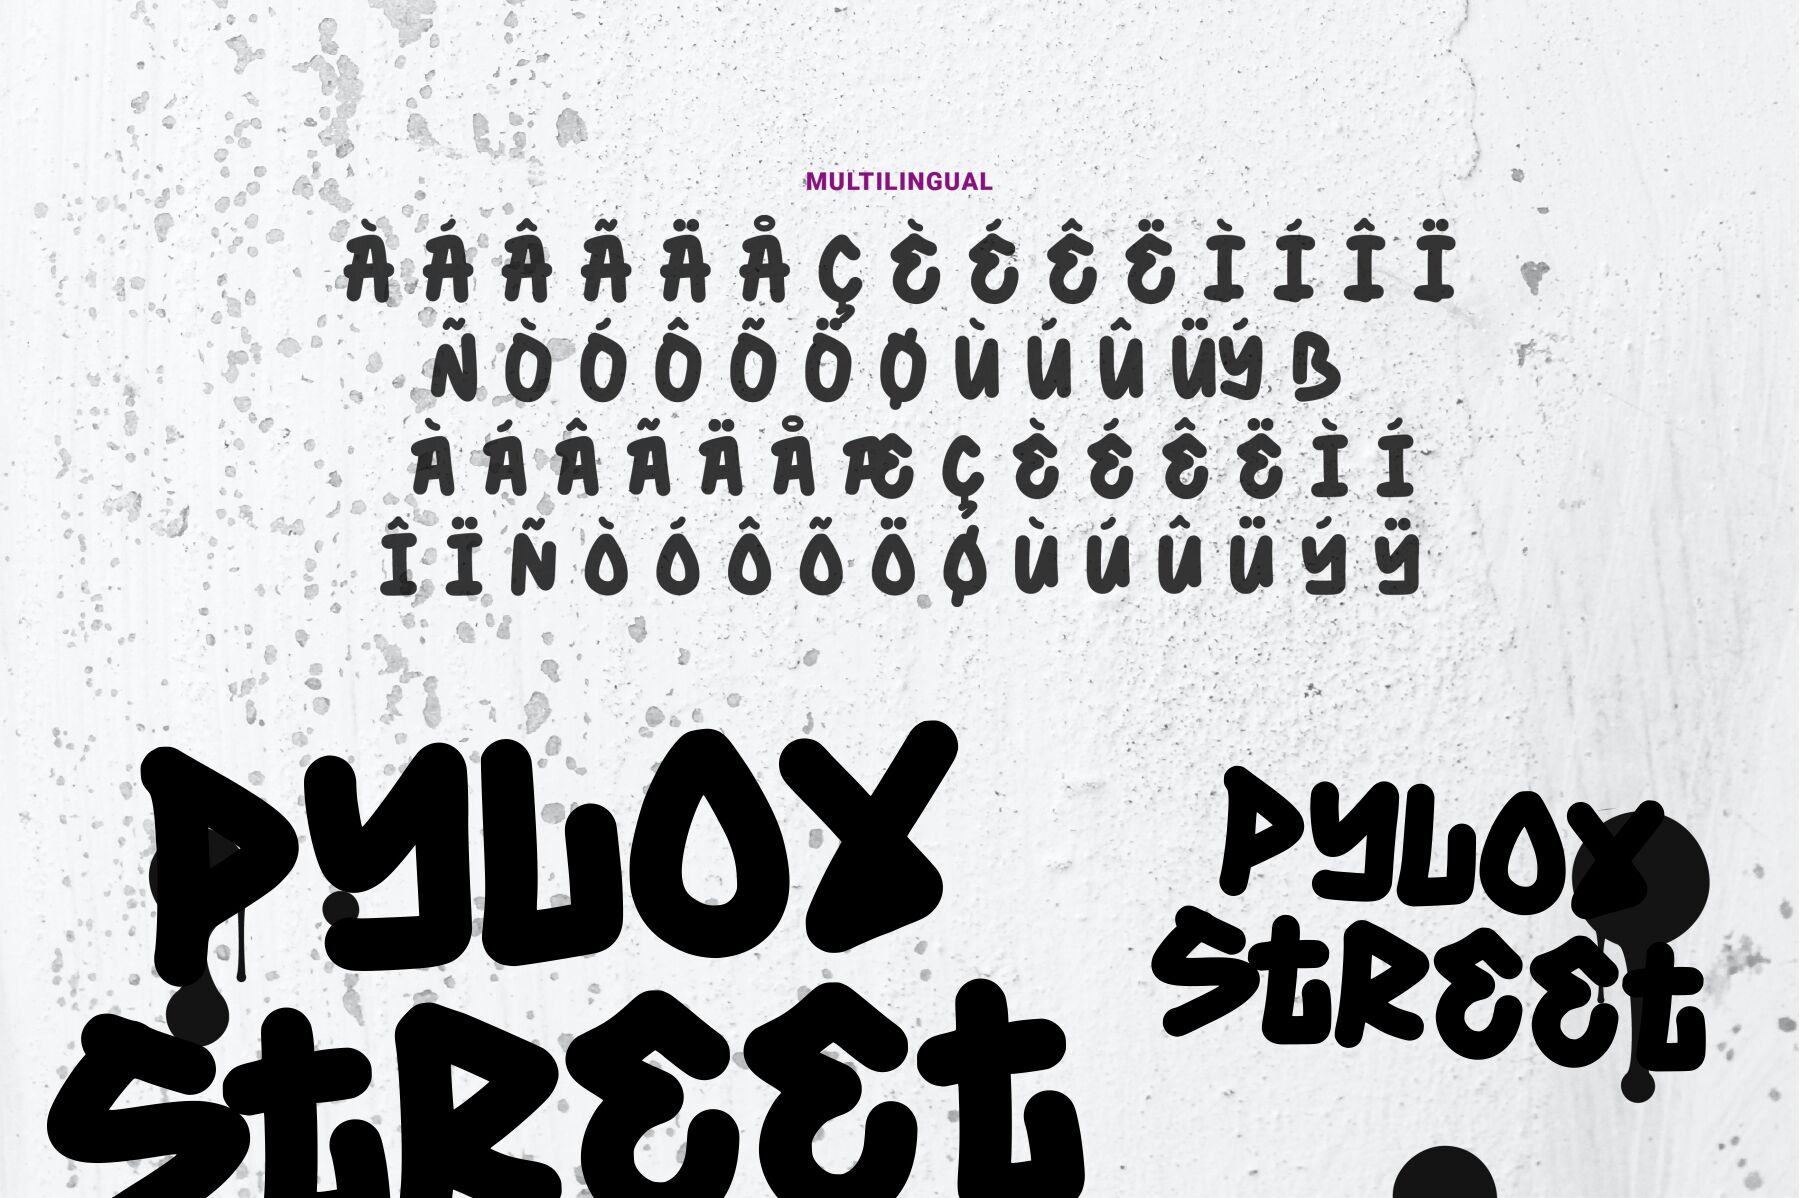 Pylox Street Bold Graffiti Font By Garisman Studio Thehungryjpeg Com